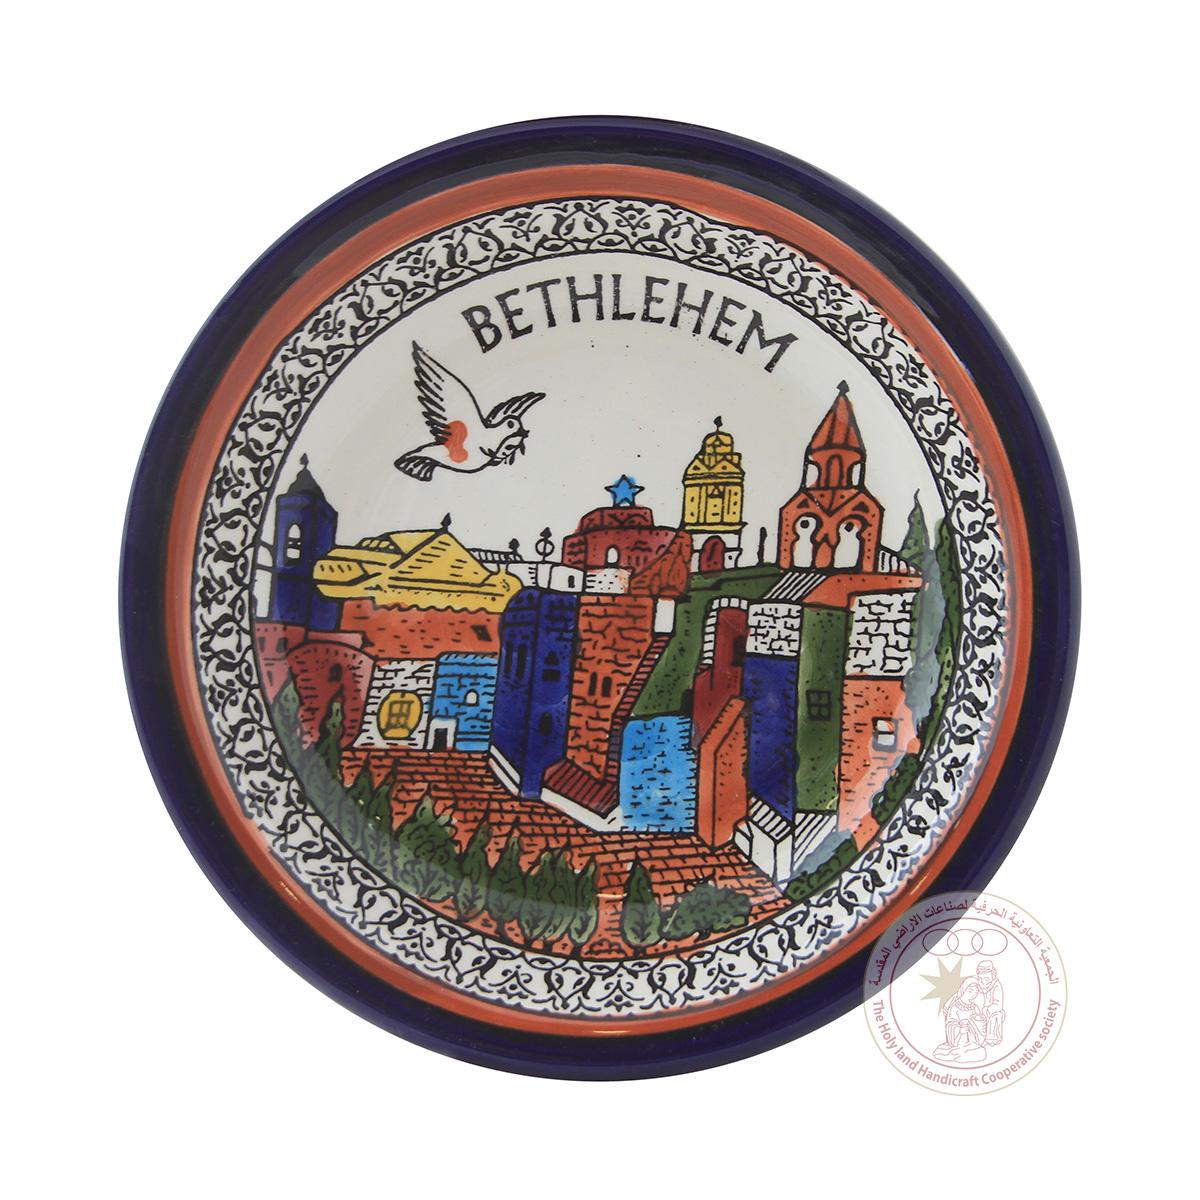 Bethlehem' Bowl Plate - 12 CM, Brown Border, Ceramic